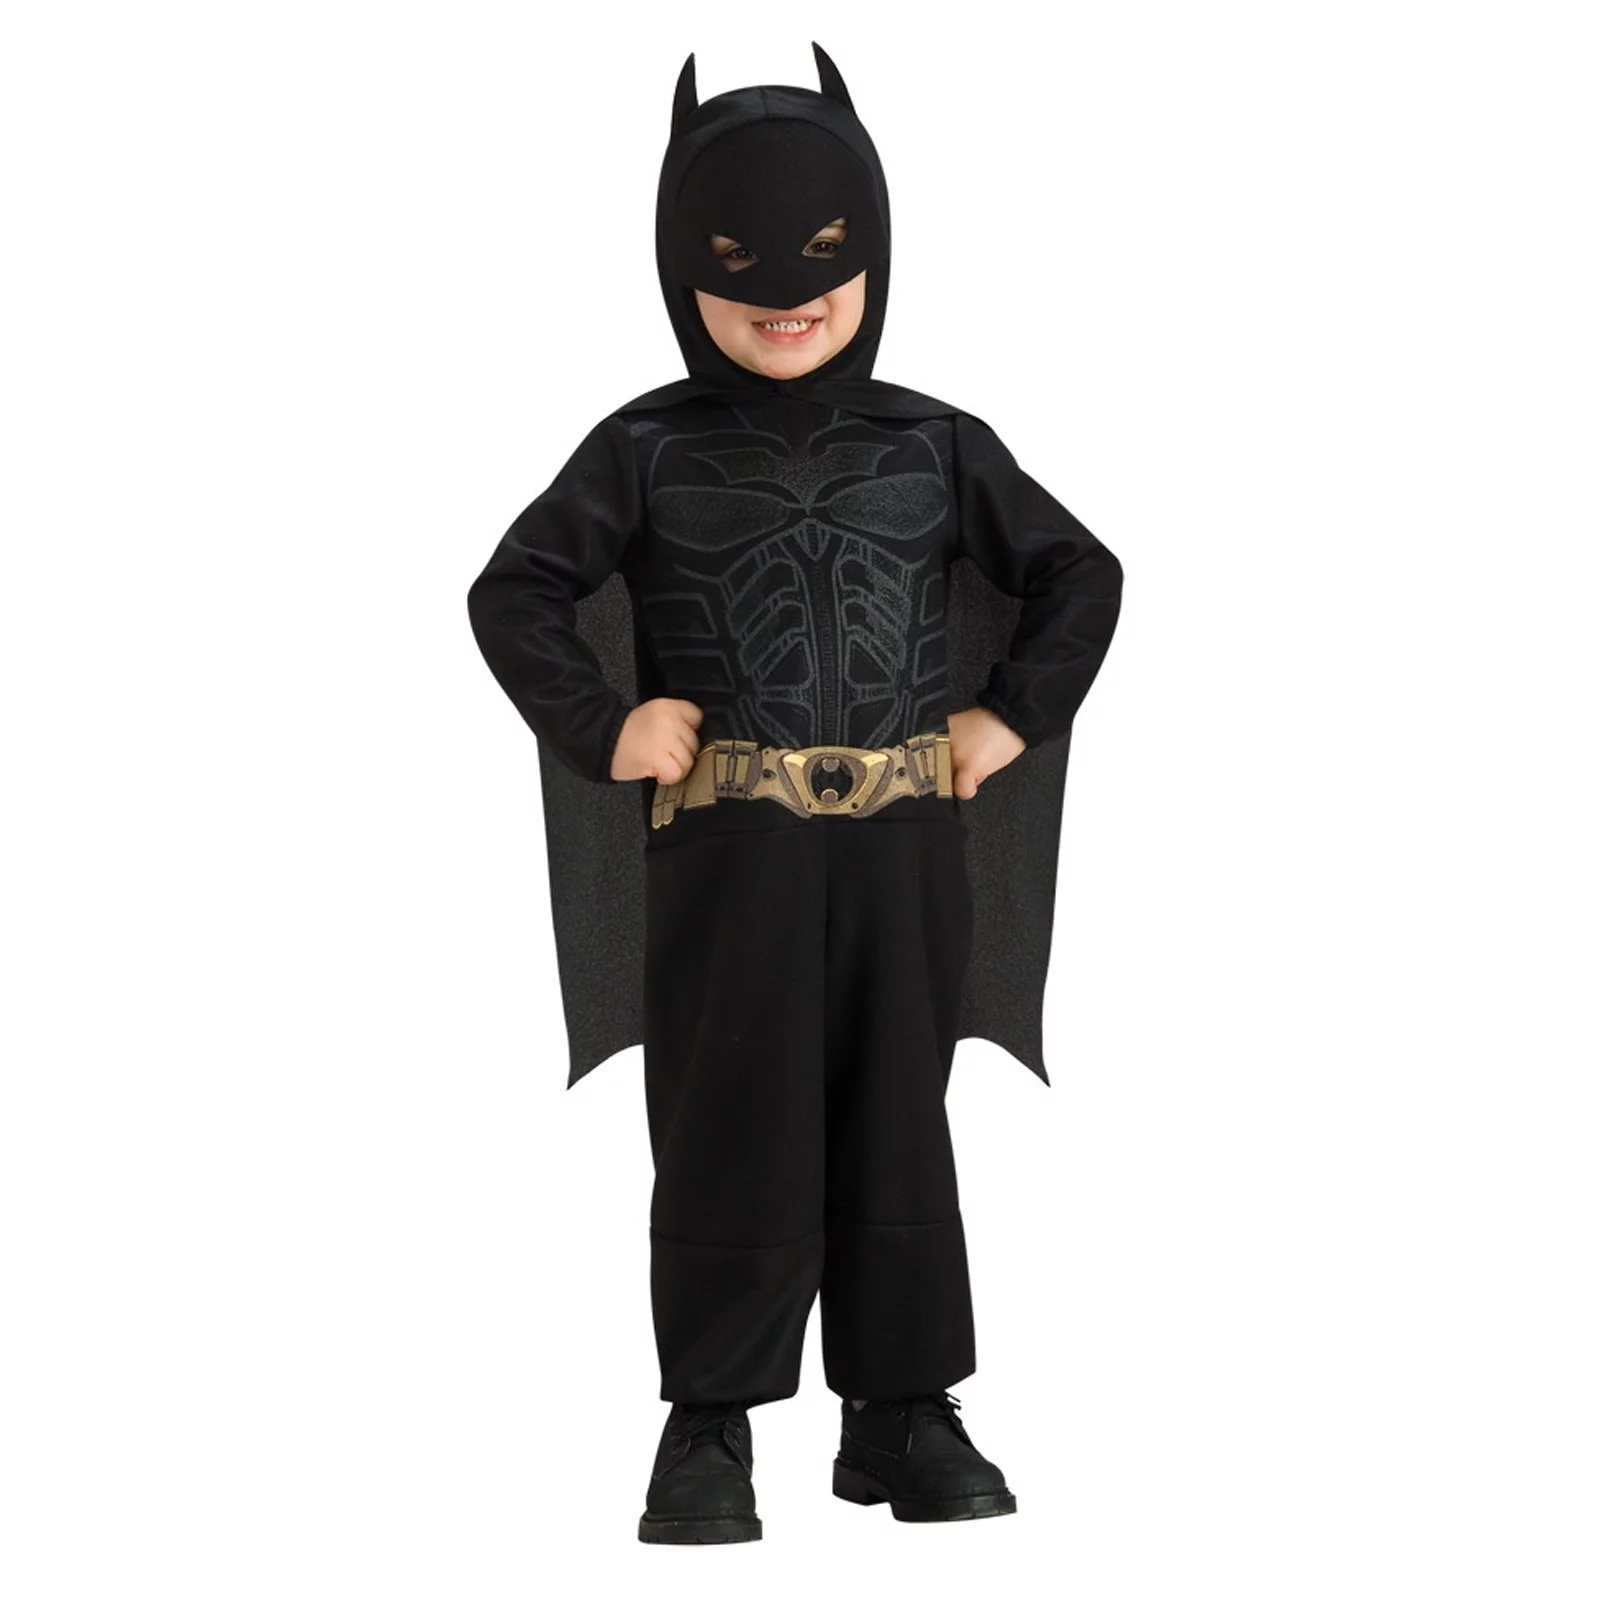 Rubie's Toddler Boys' DC Comics The Dark Knight Batman Costume - Size 2T-4T